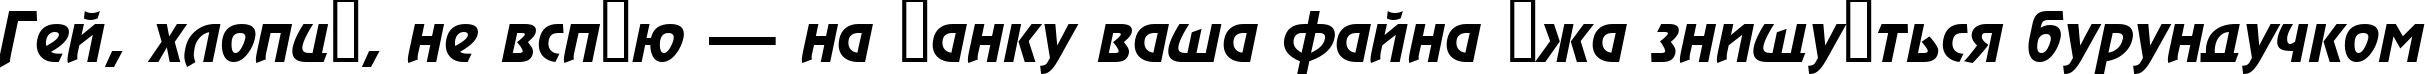 Пример написания шрифтом a_RewinderDemi Italic текста на украинском